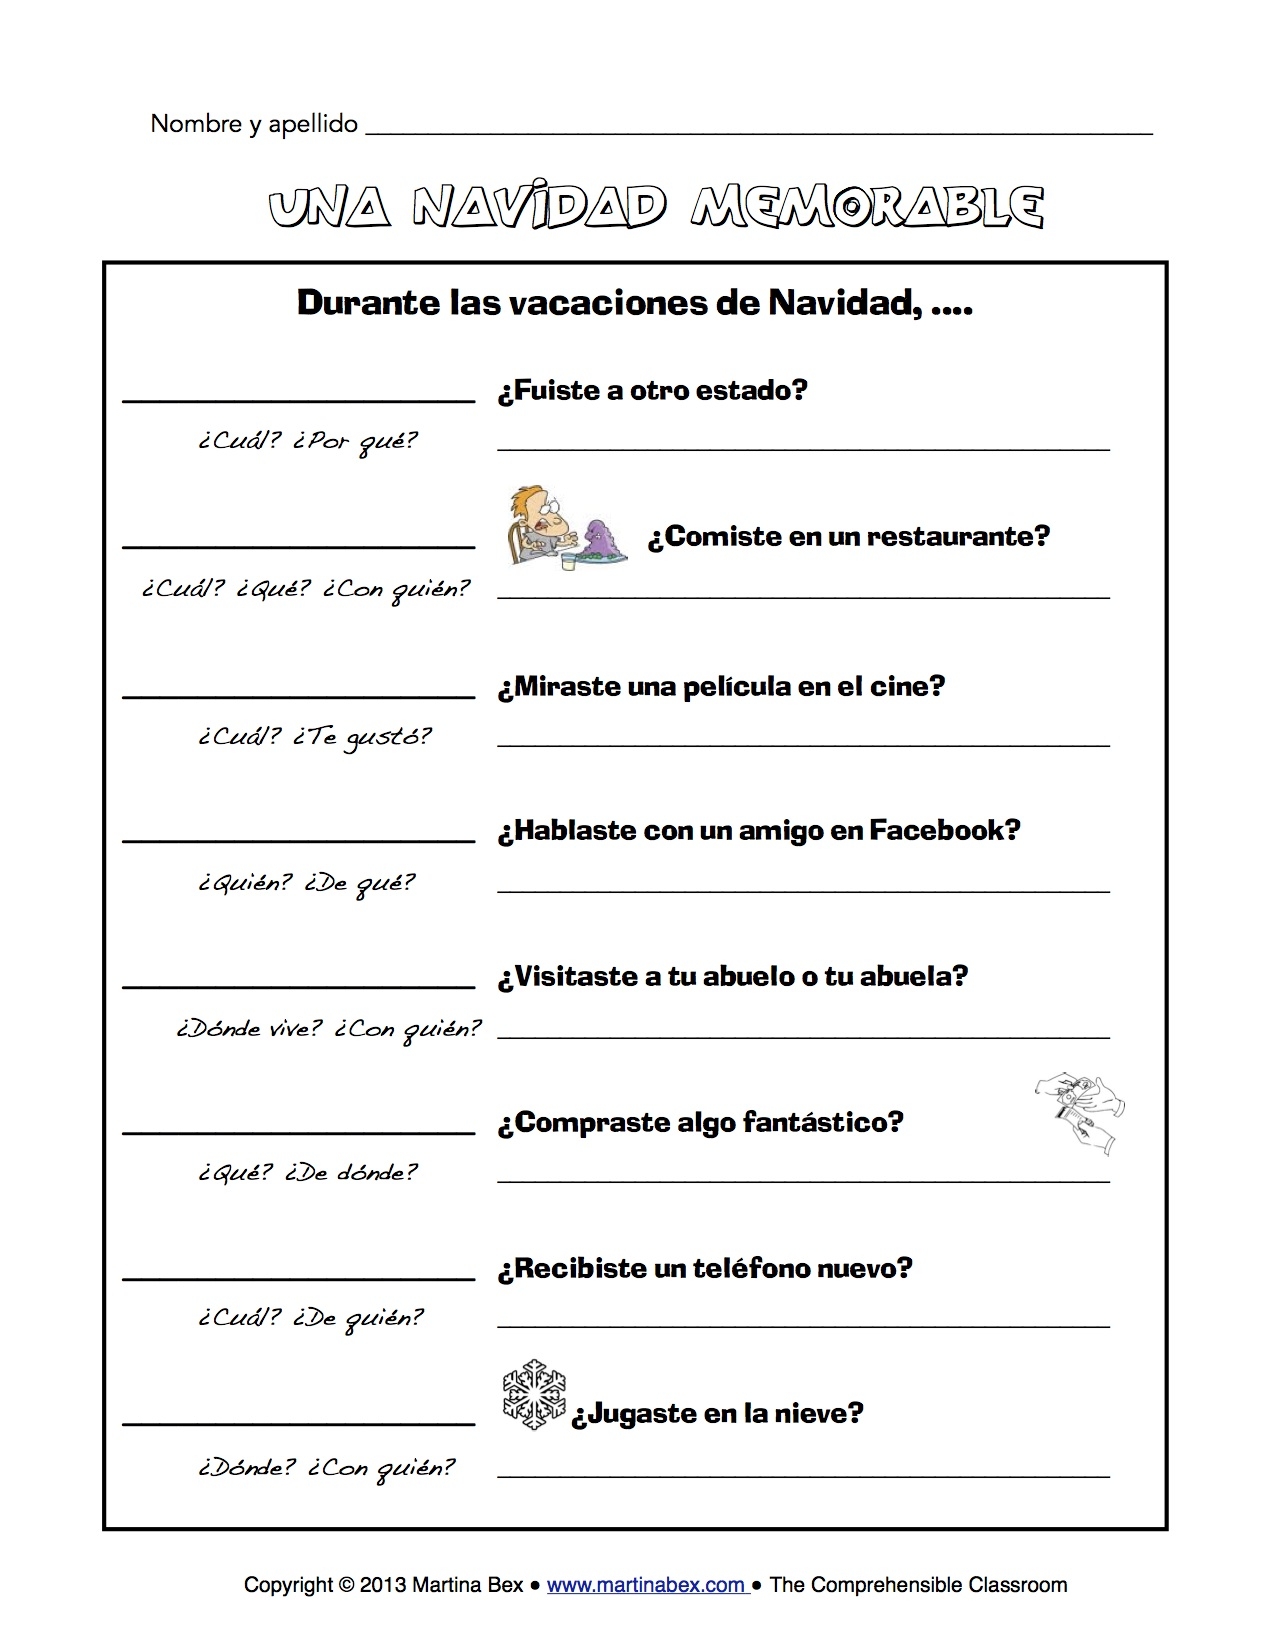 una-navidad-memorable-the-comprehensible-classroom-math-worksheet-answers